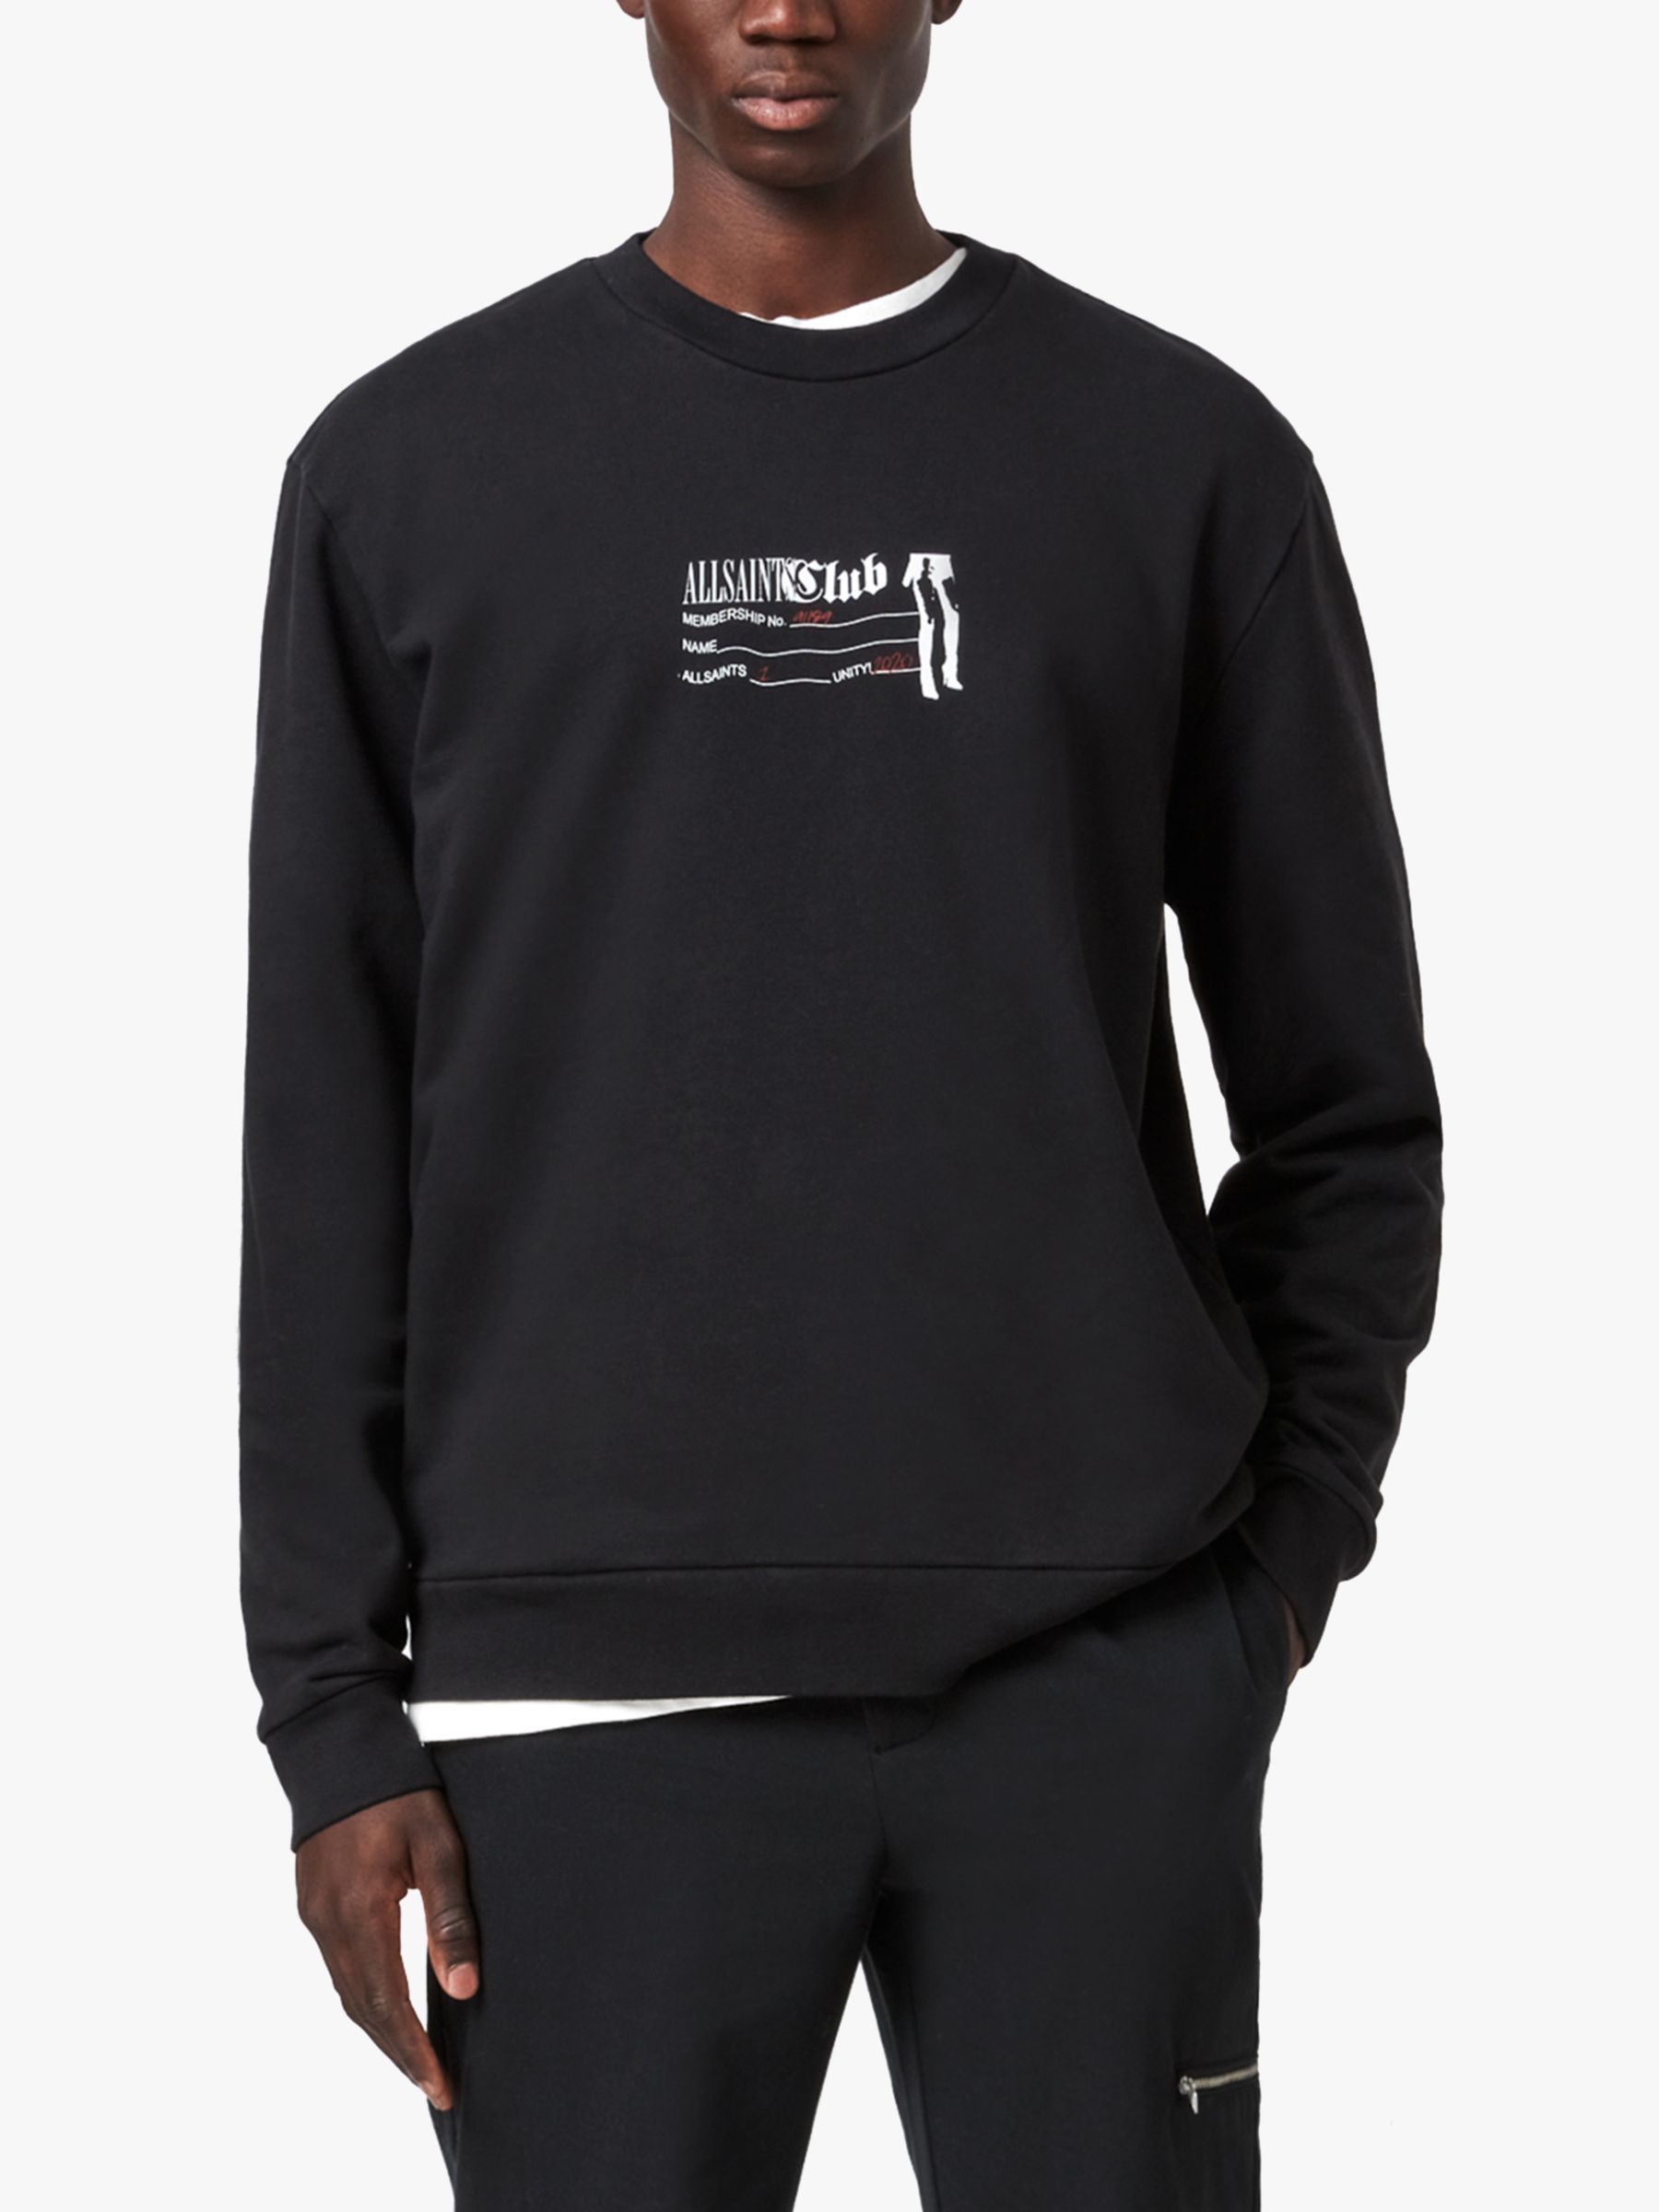 AllSaints Club Long Sleeved Sweatshirt, Jet Black